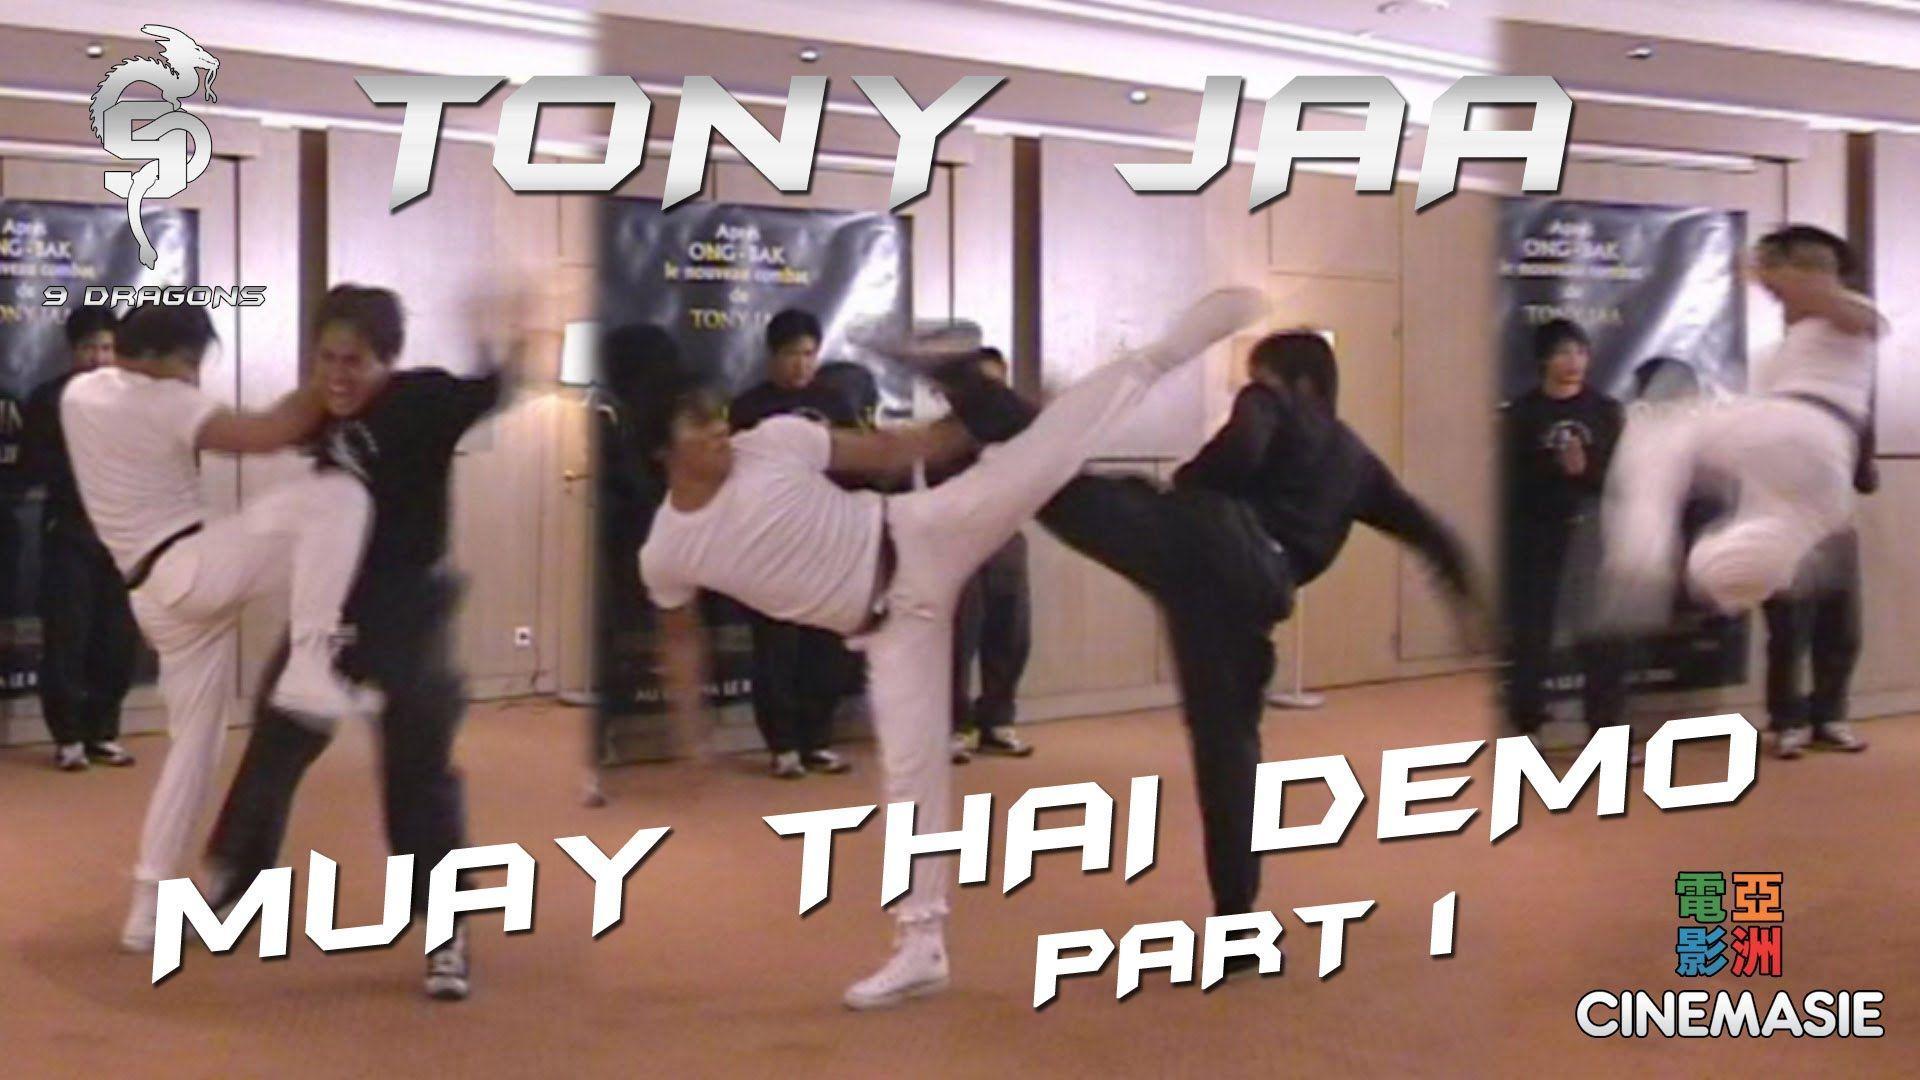 Tony Jaa Muay Thai Demo (Part 1) [Paris]